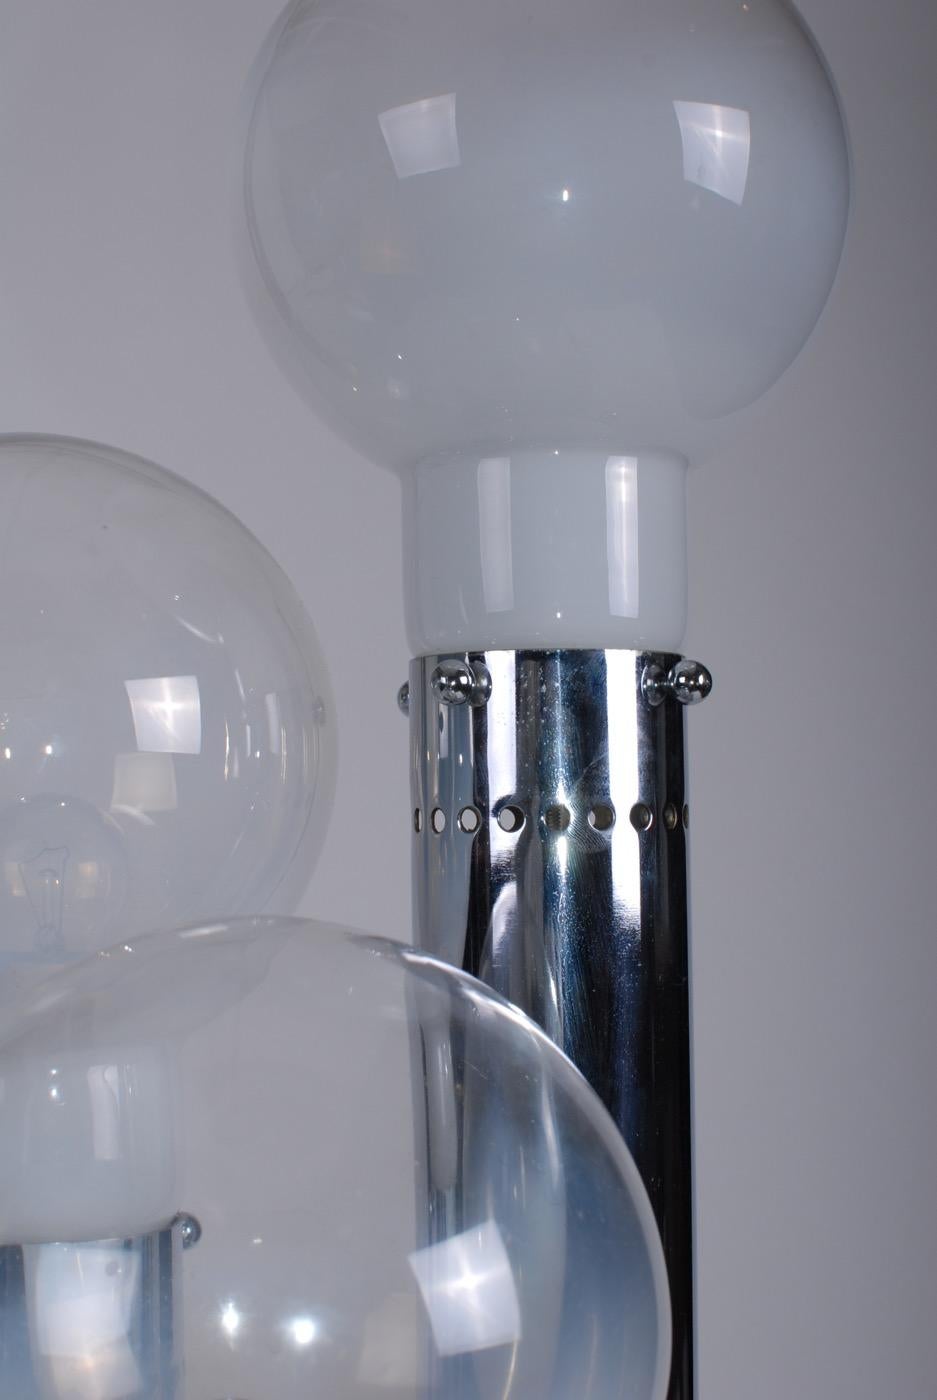 Italian Reggiani Space Age Aluminium Table Ceiling Lamp Glass Shades, 1970s For Sale 2